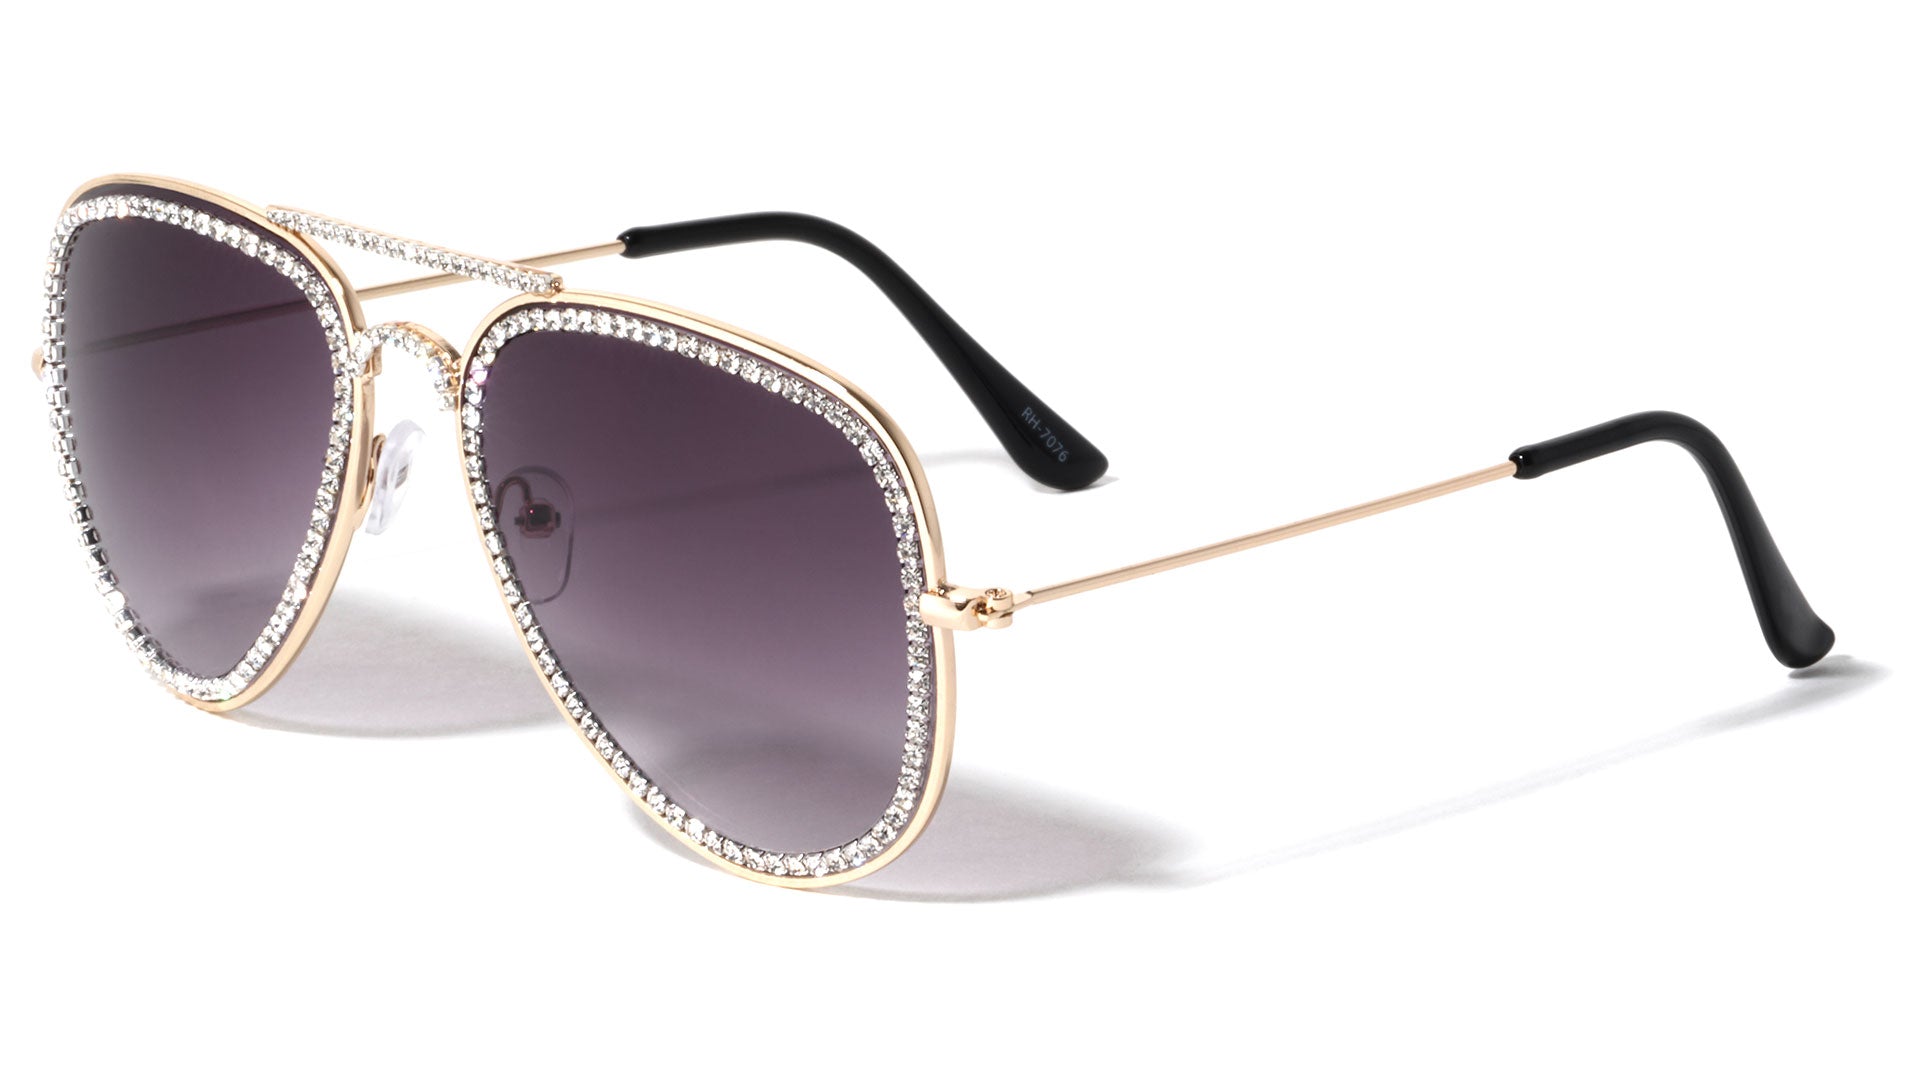 CHANEL Sunglasses for sale in Arlington, Texas